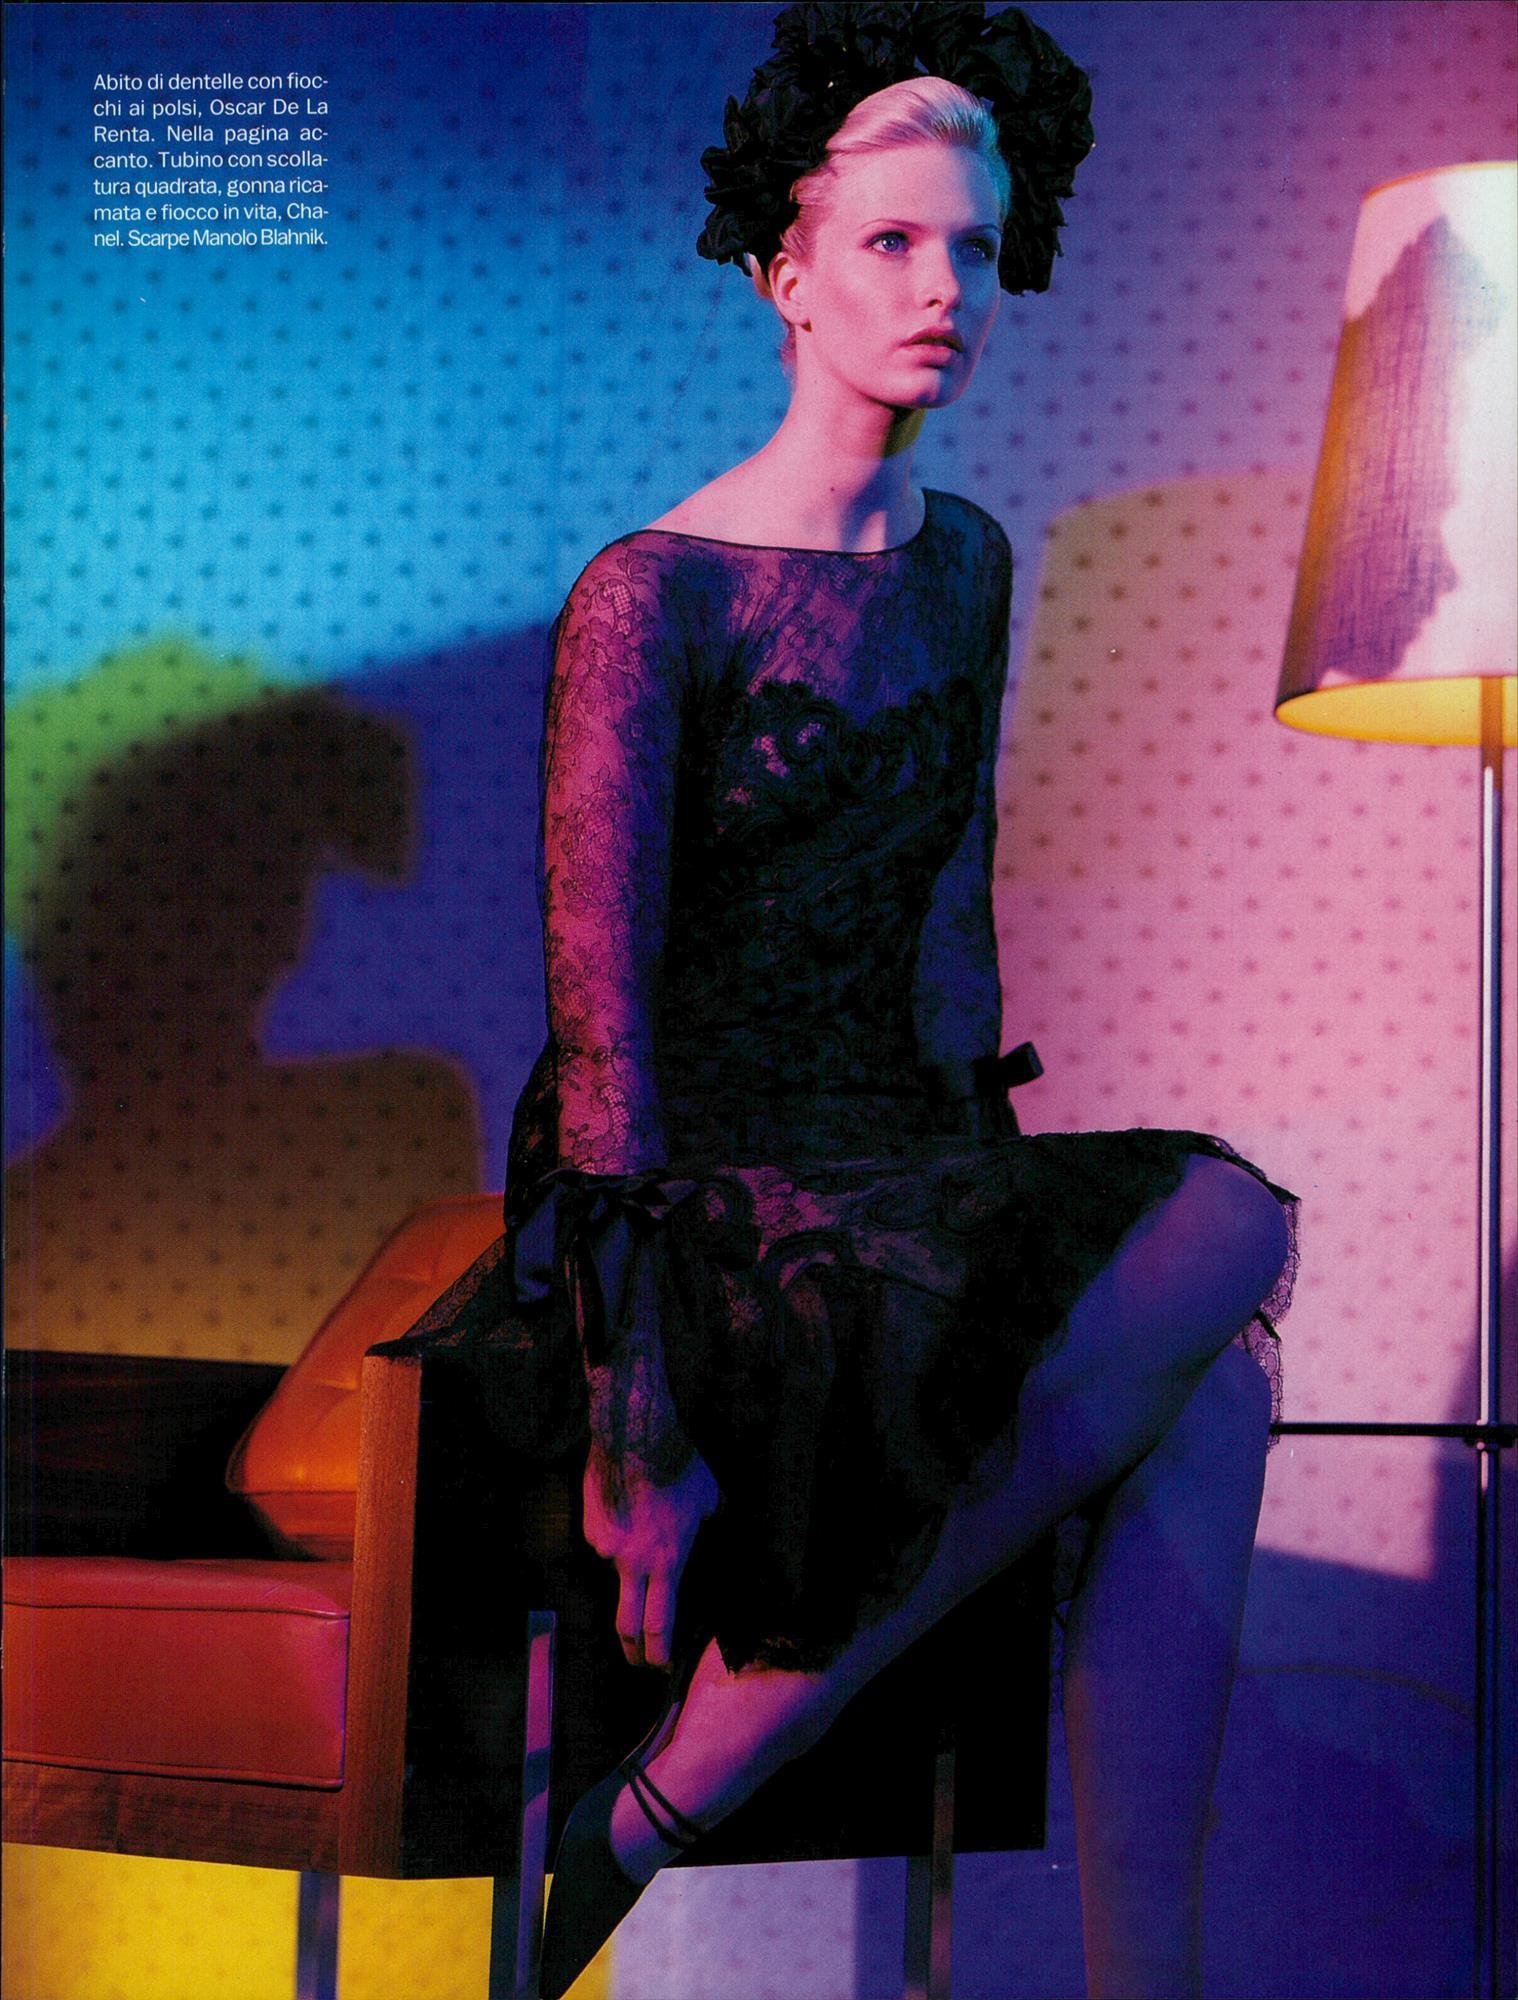 Steven-Meisel-Mood-of-Black-Vogue-Itali9a-540-August-1995-4.jpeg